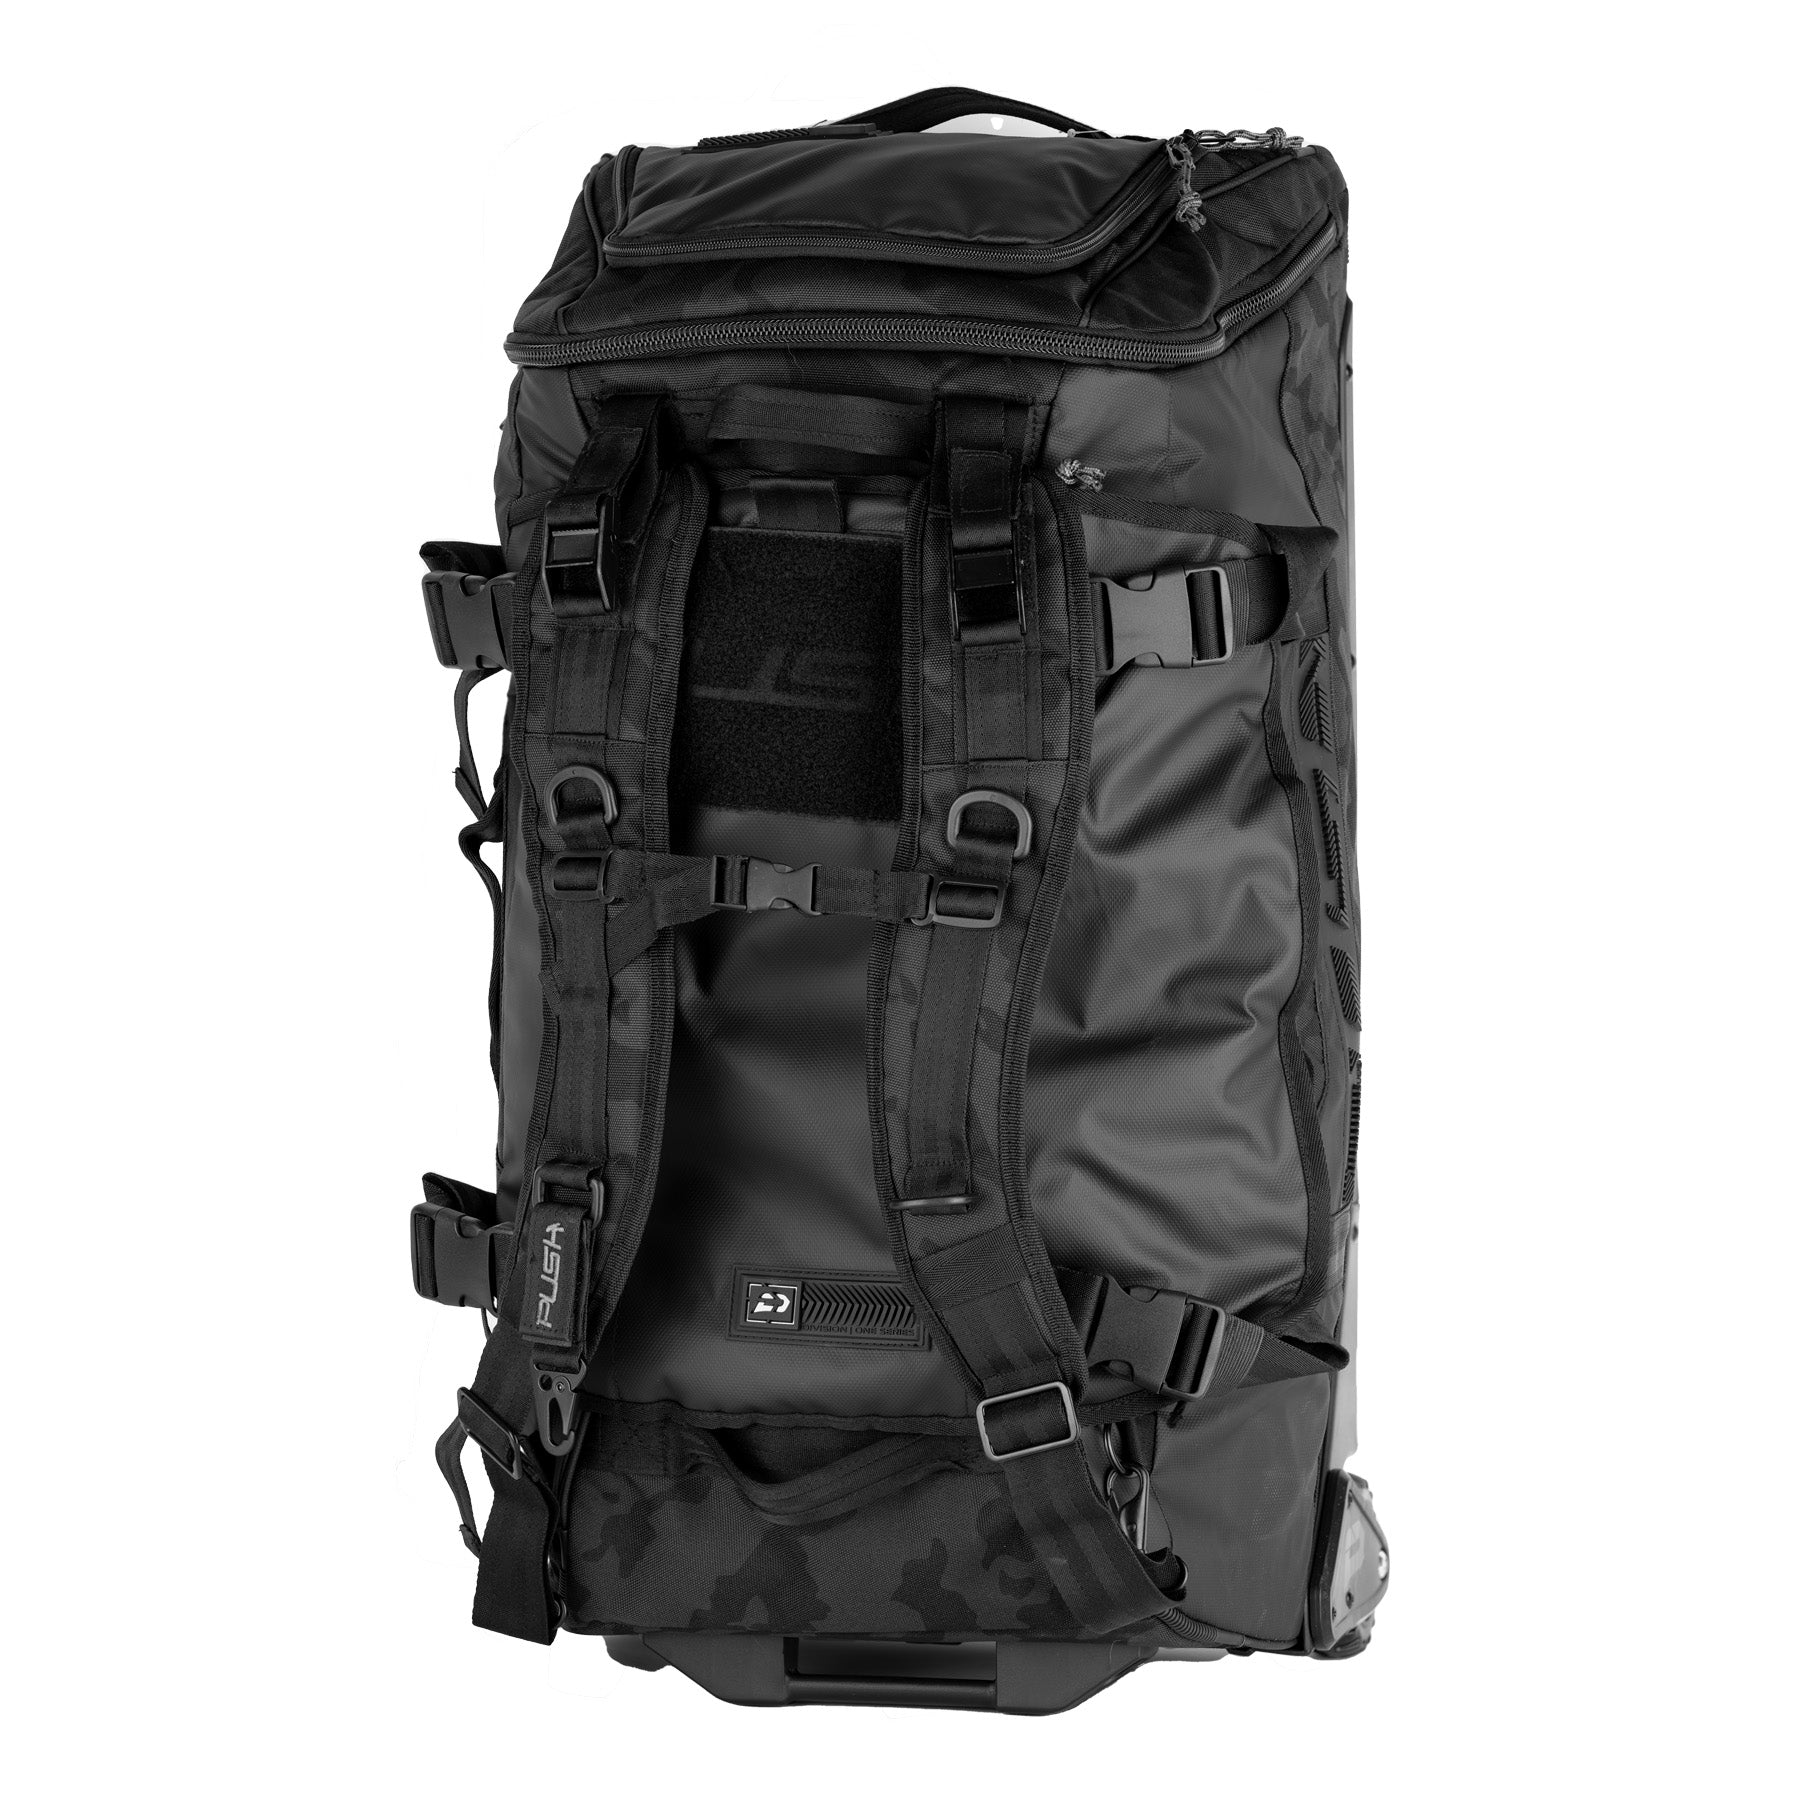 Push Division 01 Medium Rolling Gear Bag - Black